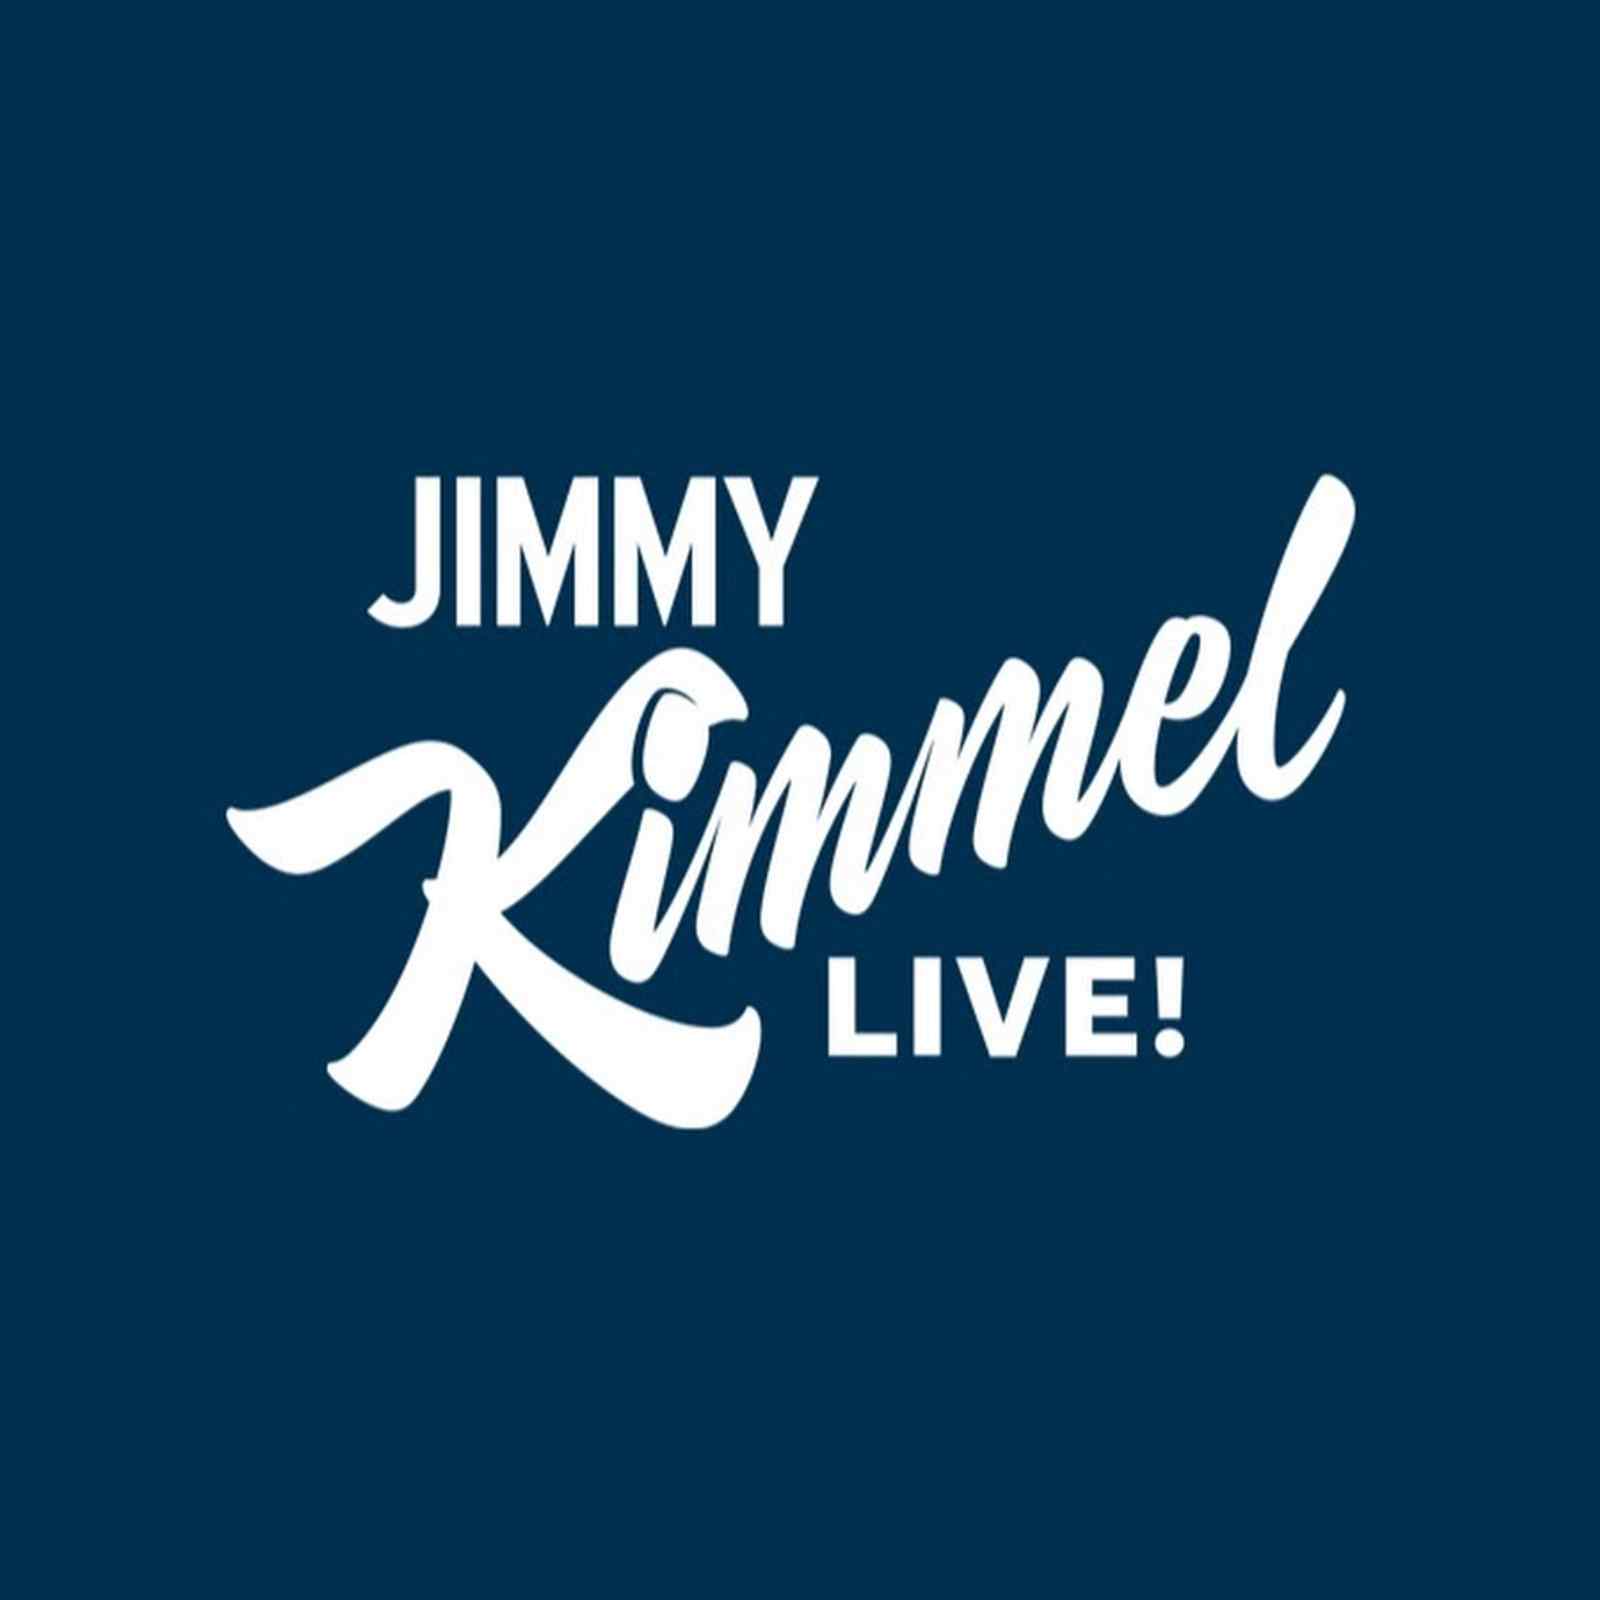 Jimmy Kimmel Live!: Luke Bryan